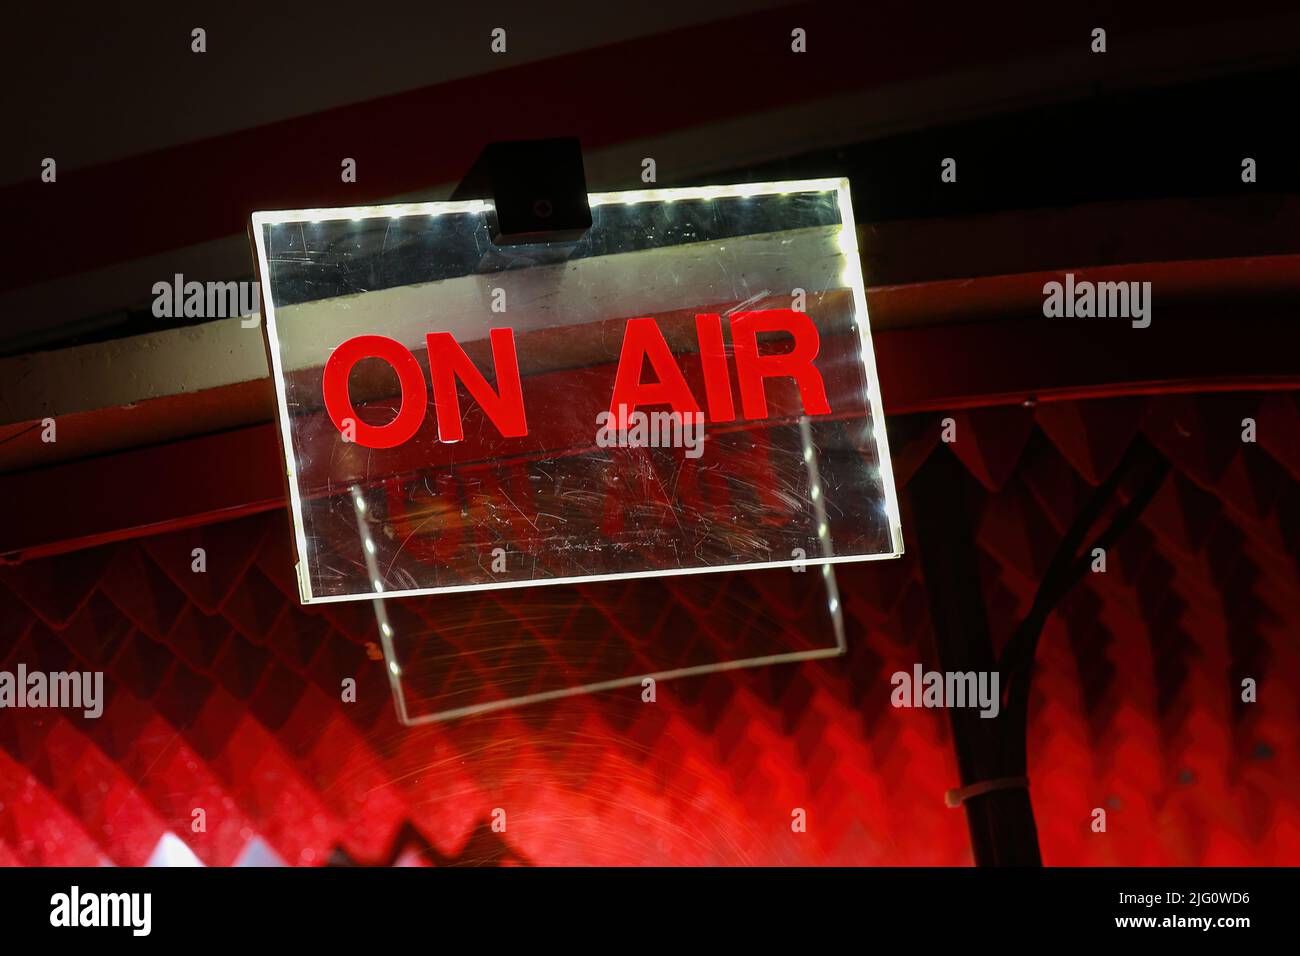 On Air studio sign illuminated. Live online radio. Stock Photo